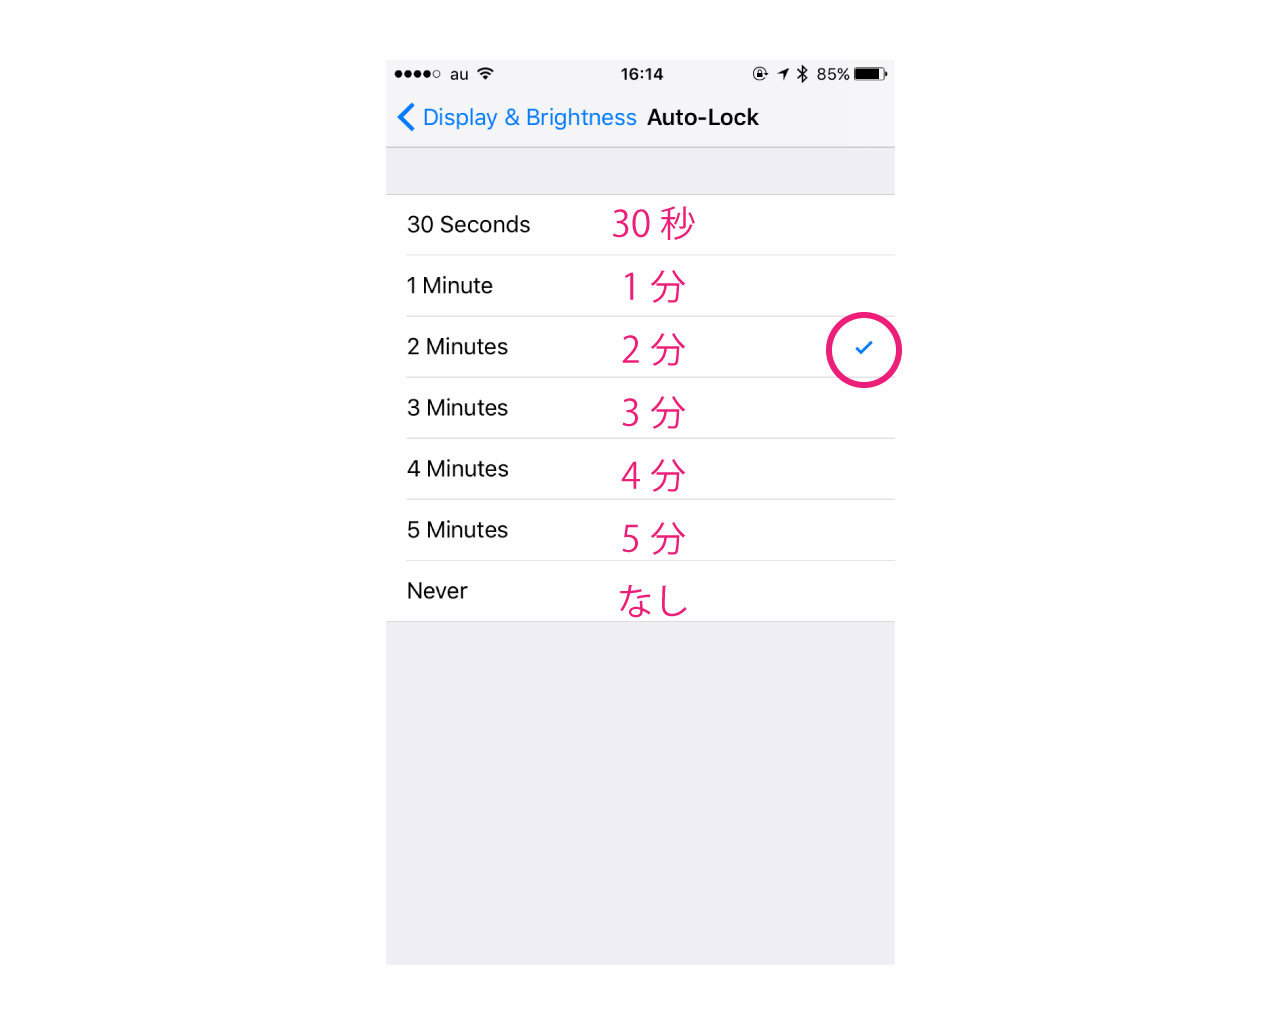 iphone-display-autolock-seconds-minute-never-2